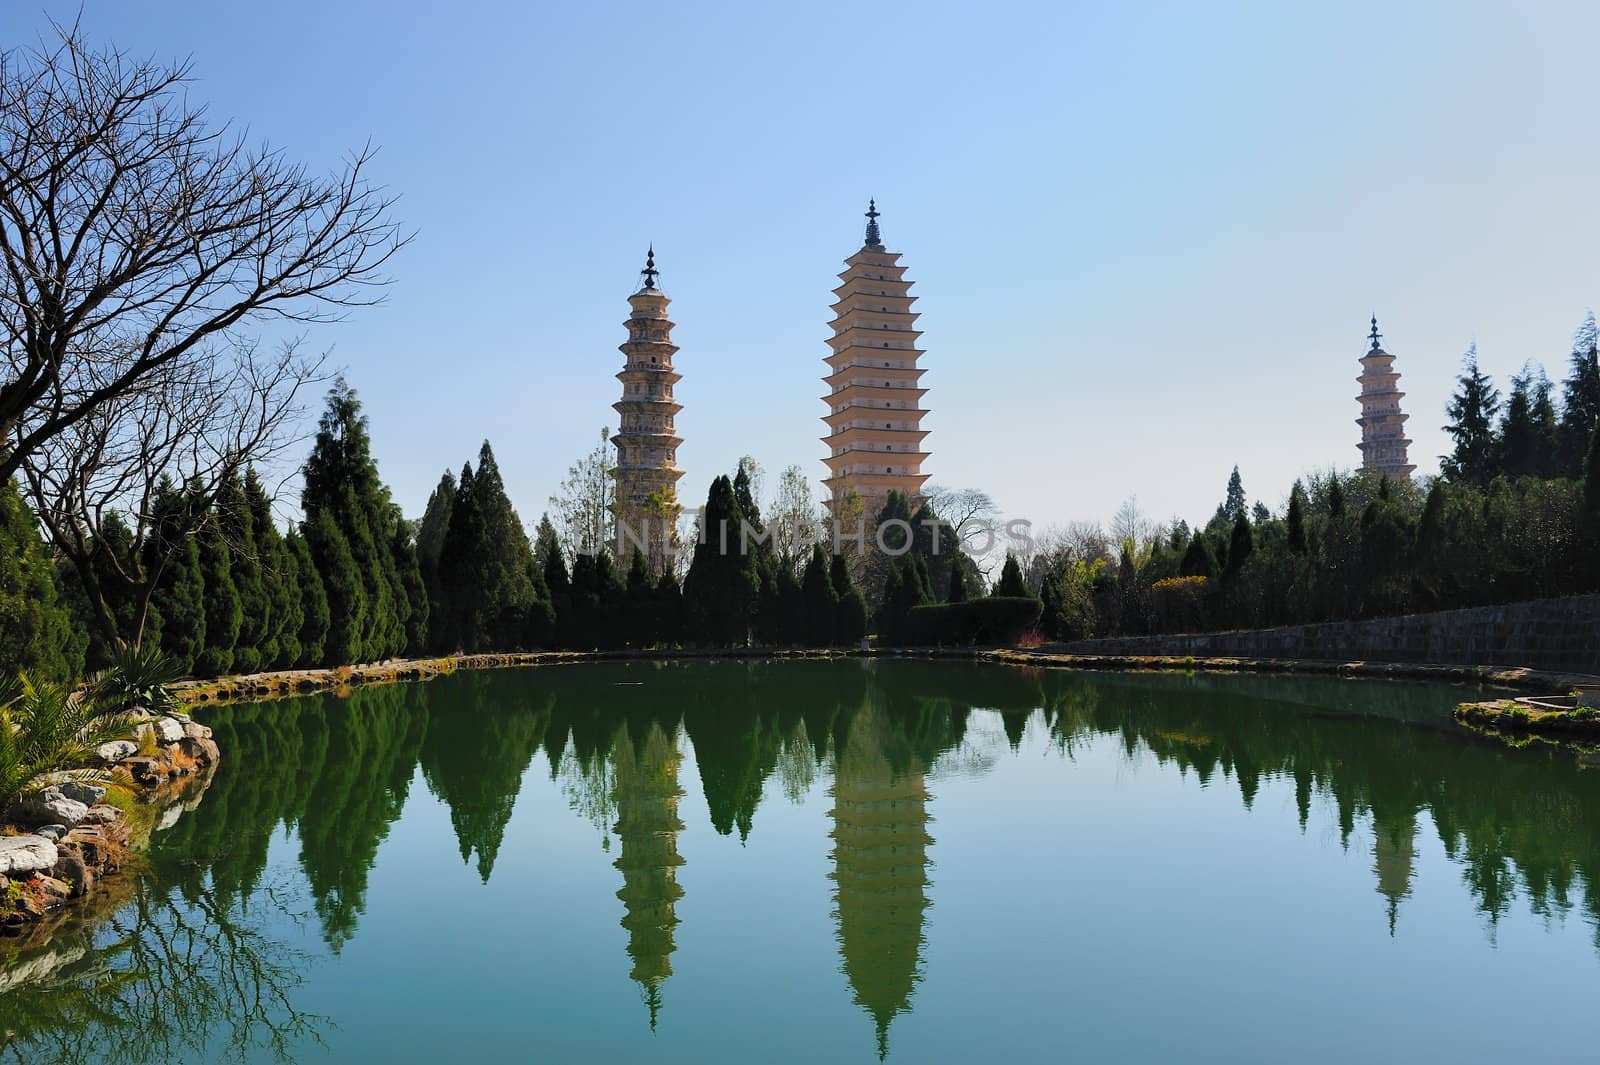 Buddhist pagodas in Dali, Yunnan province of China